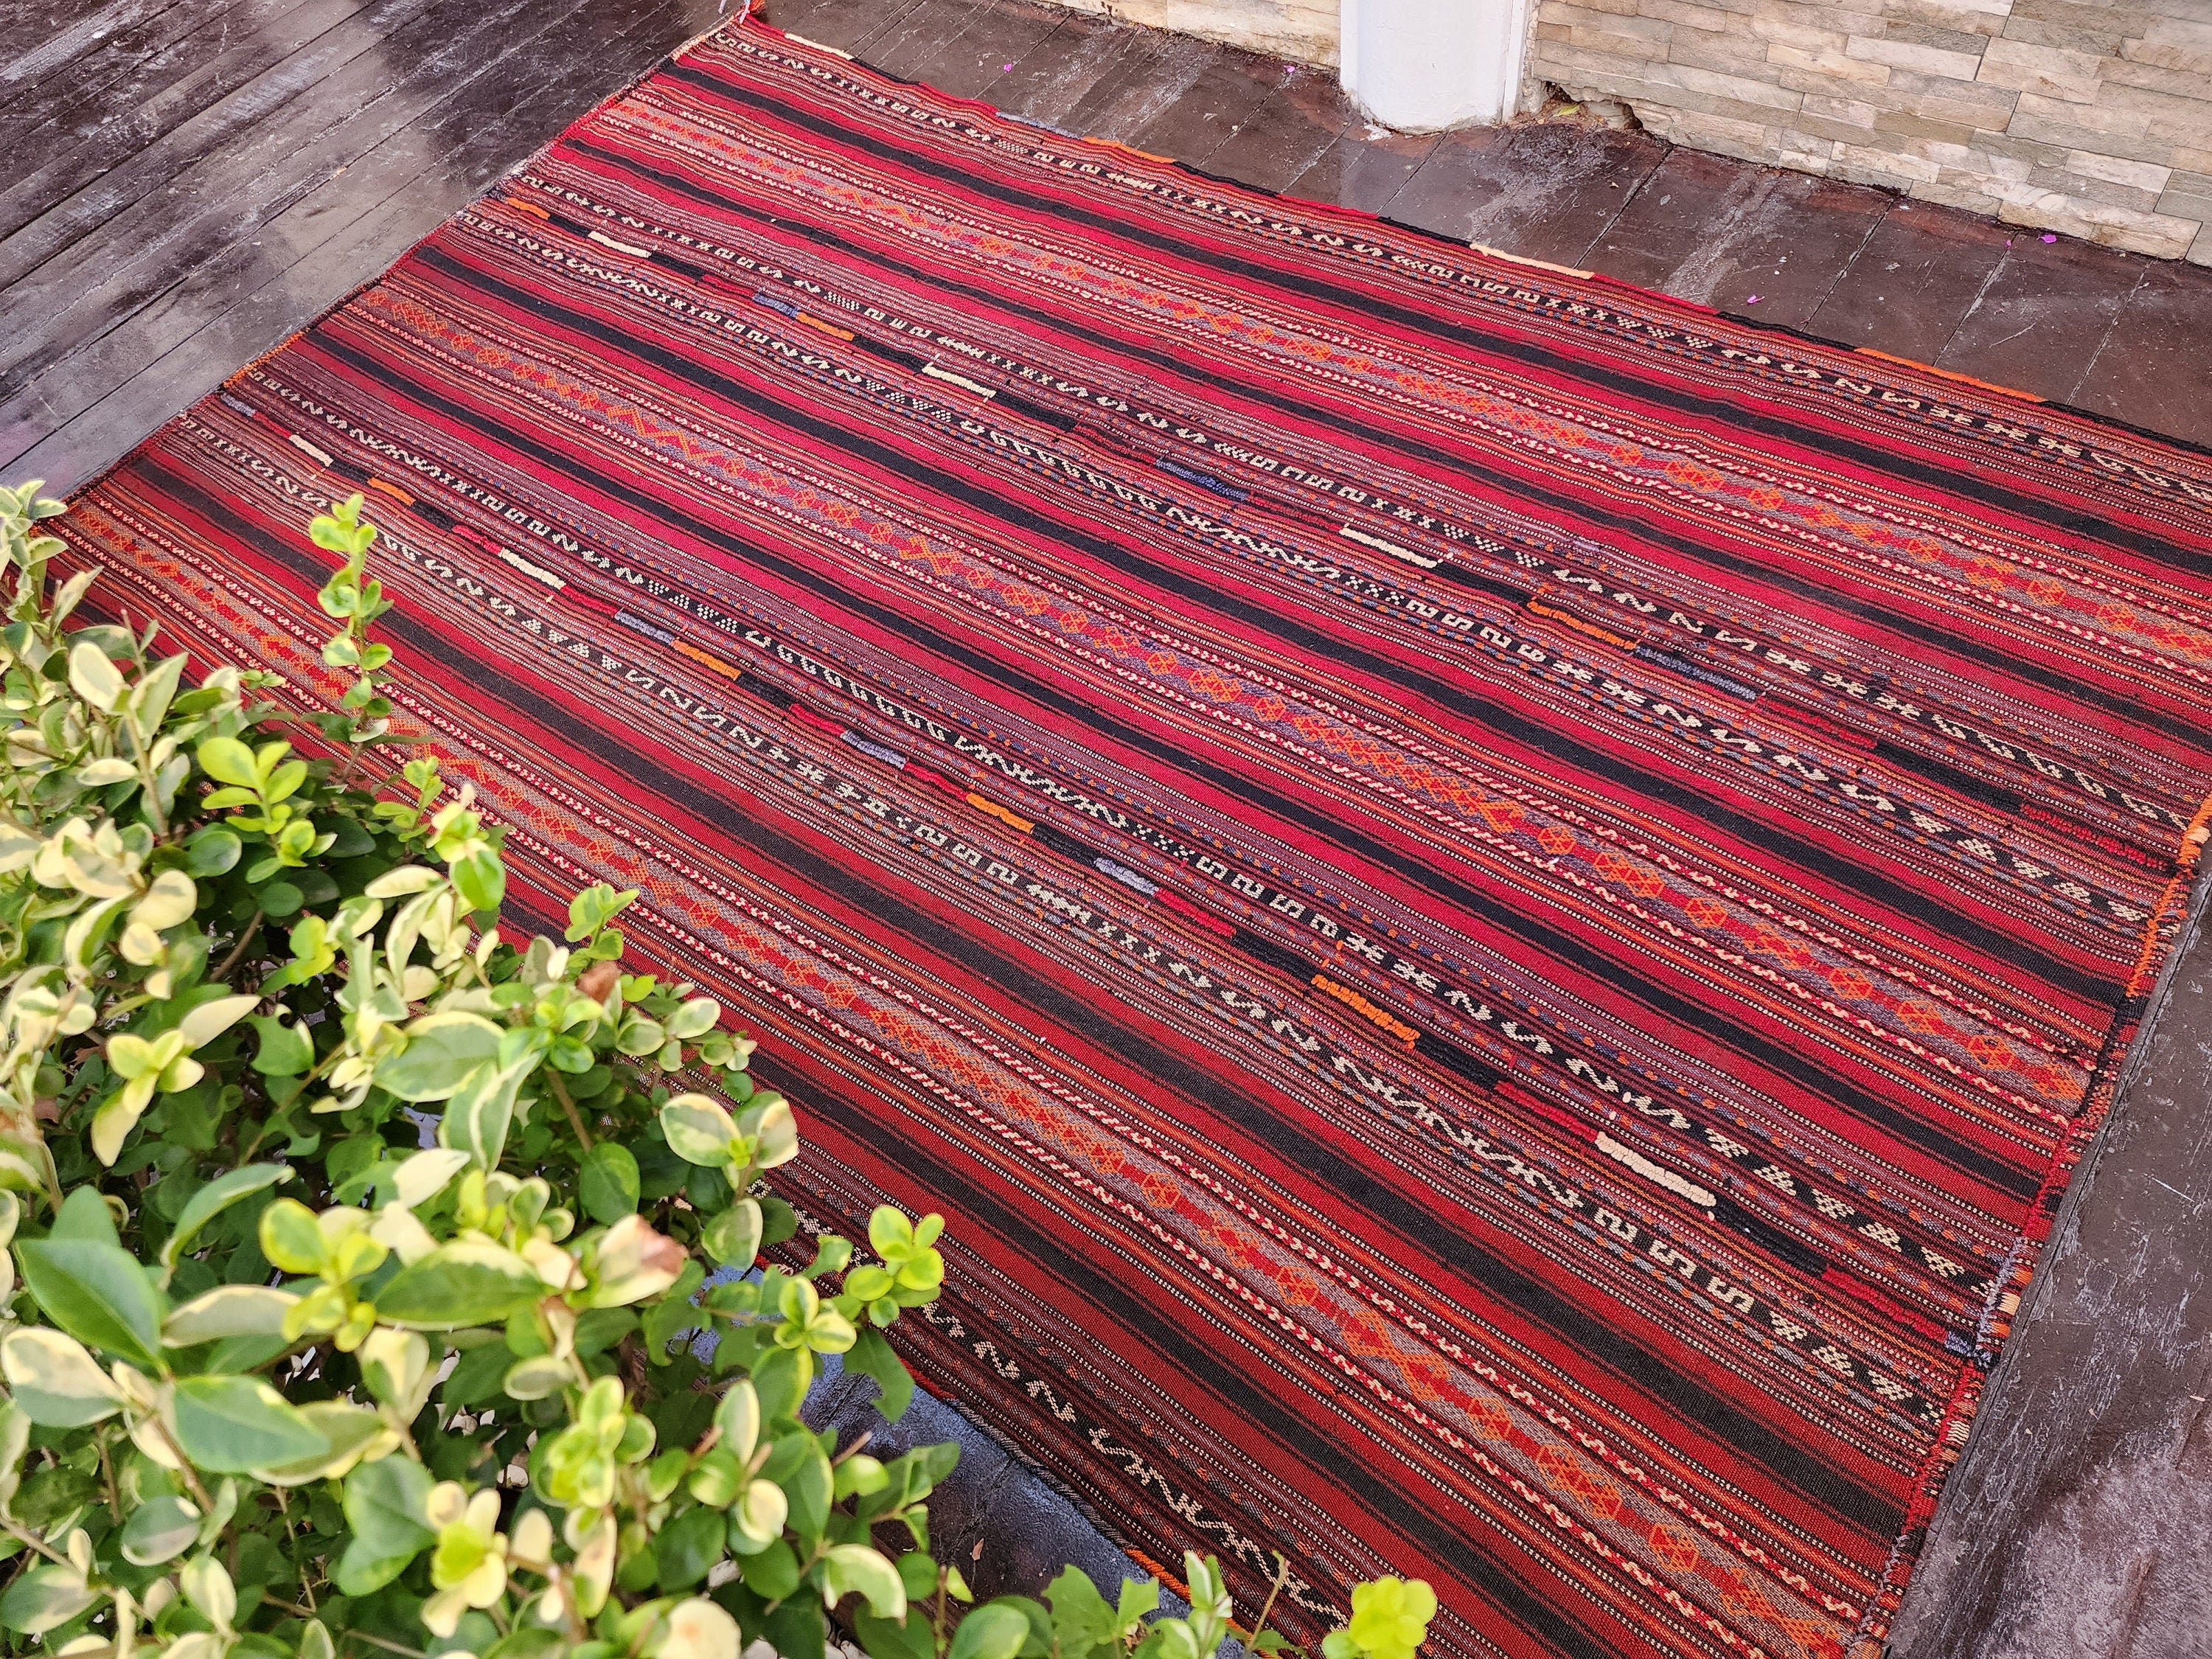 Tribal Kilim Rug, Living Room Rug, Rustic Rug, Organic Wool Rug, Antique Rugs, Ethnic Boho Red and Grey Striped Persian Area Rug 7'9''x''5''